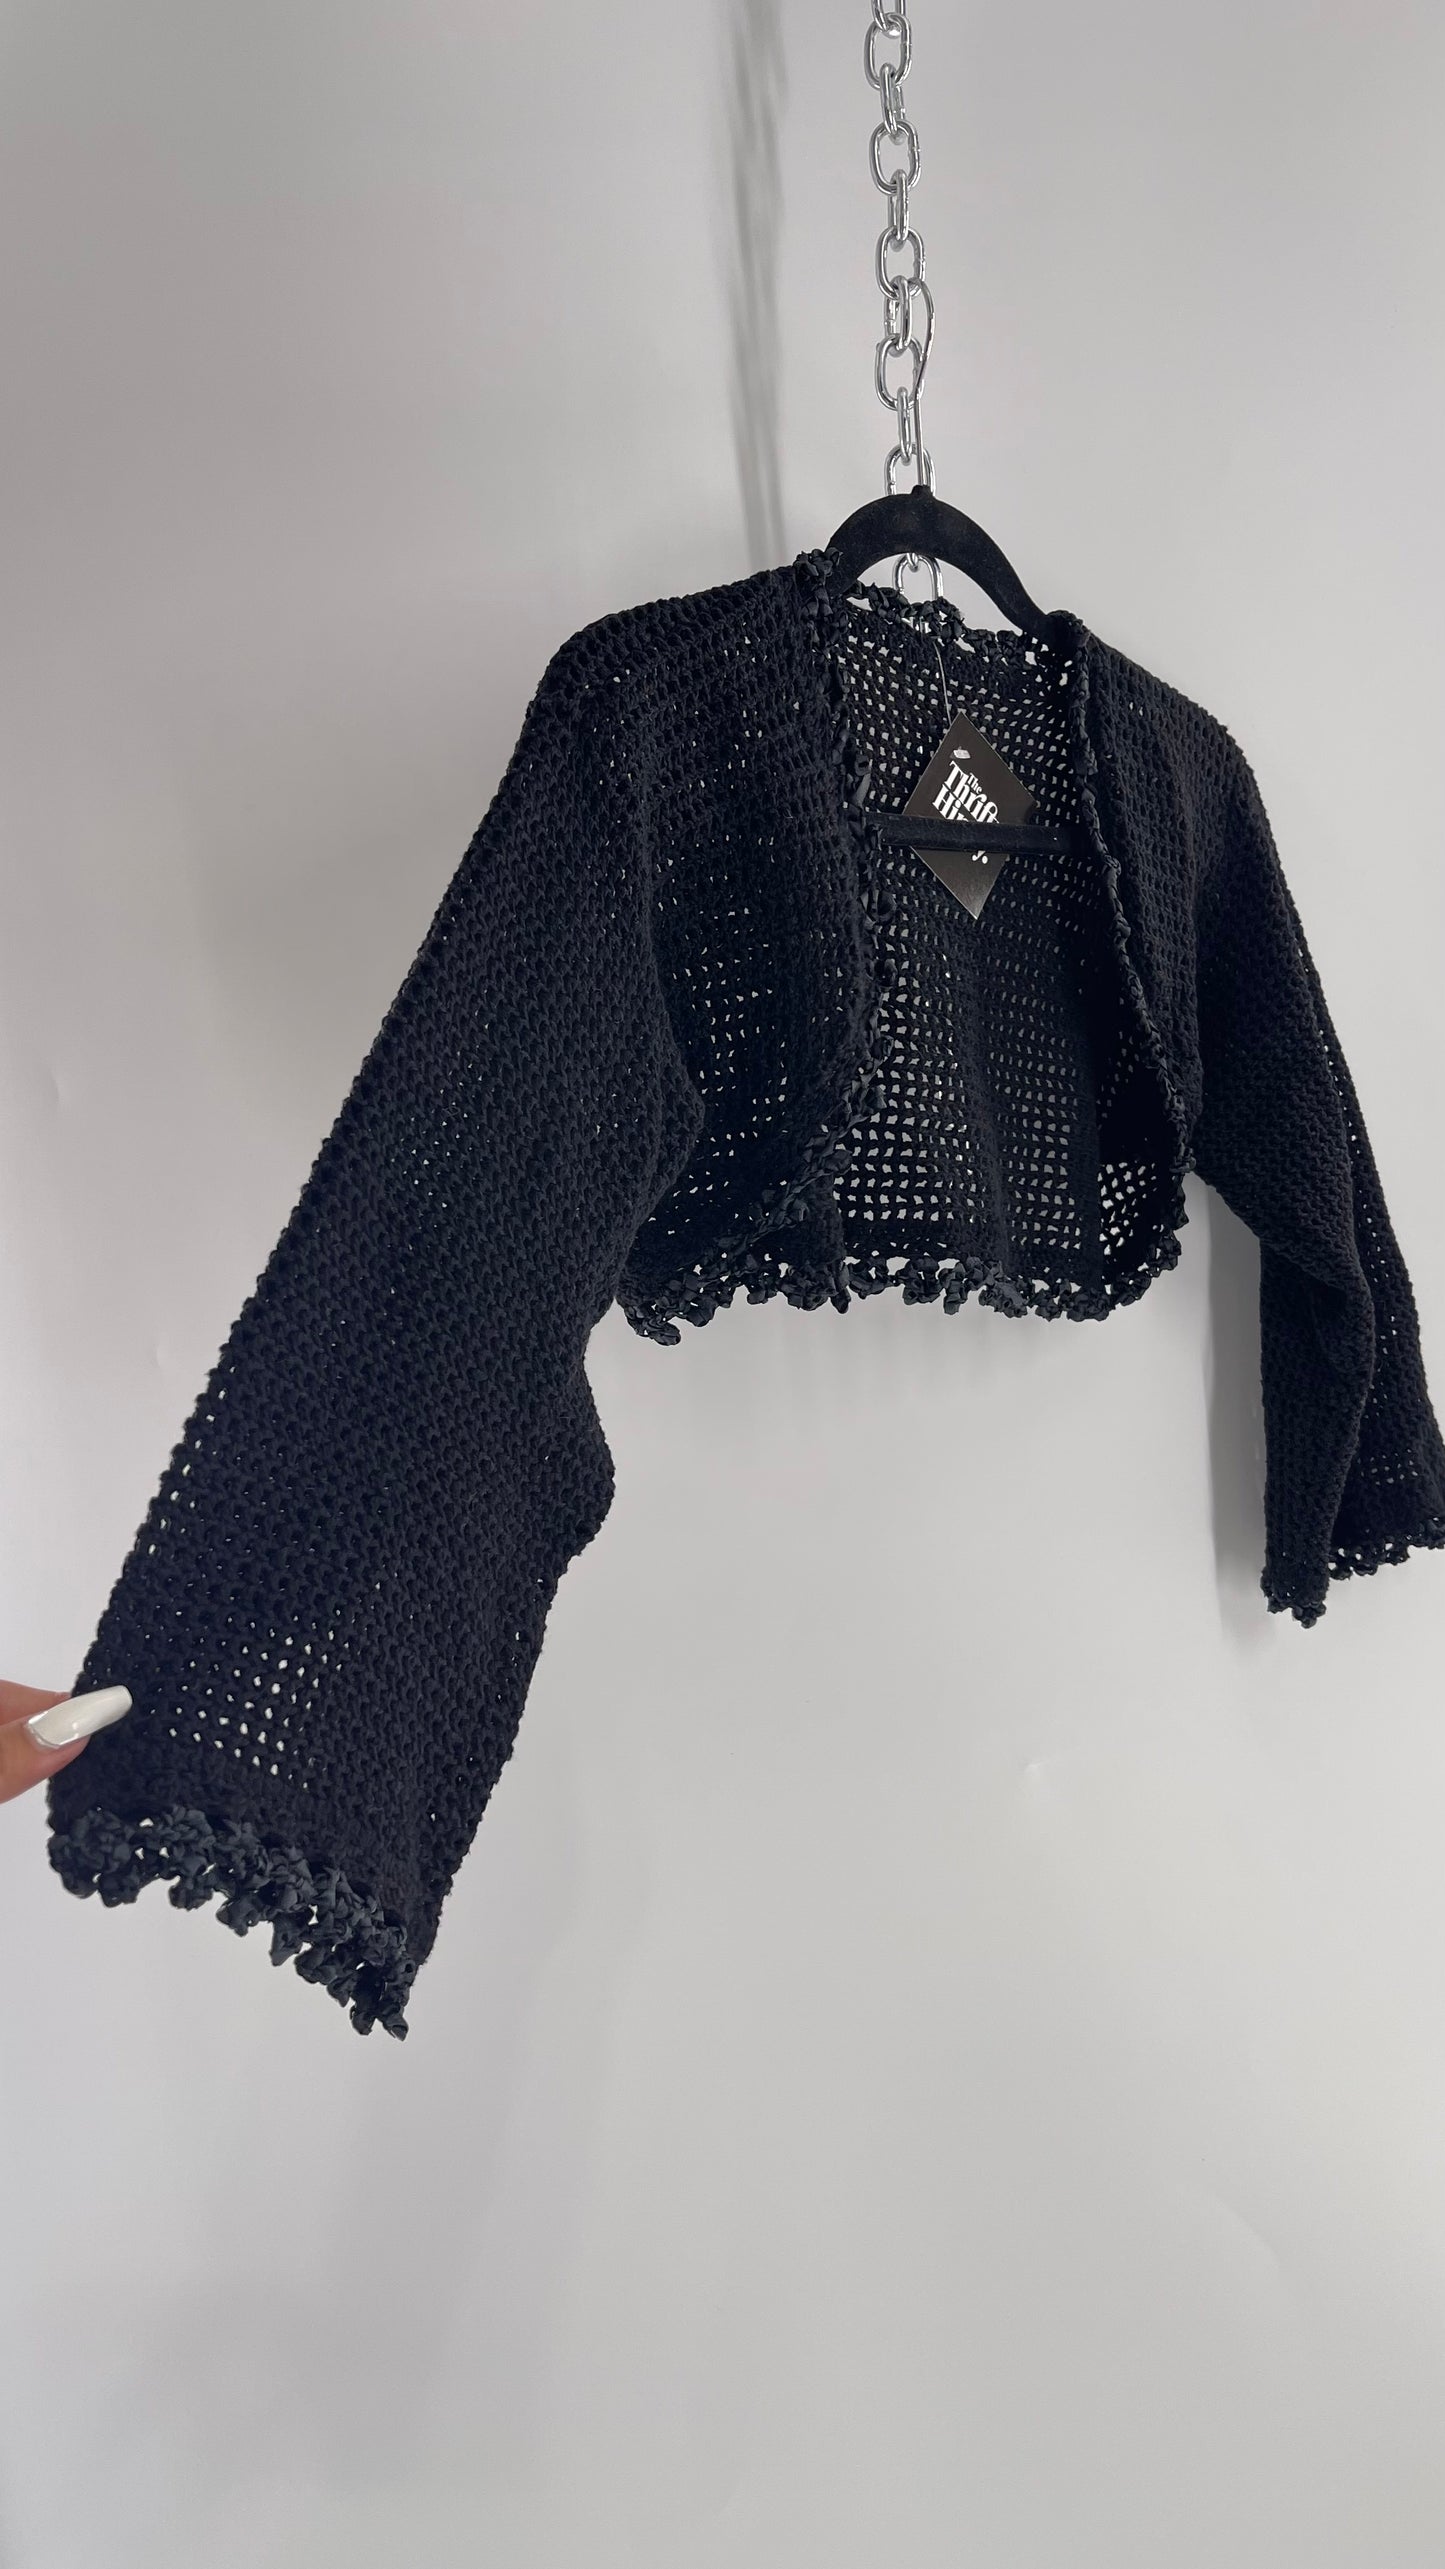 Vintage Black Hand Knit Crochet Shrug with Ribbon Detailing (Medium)